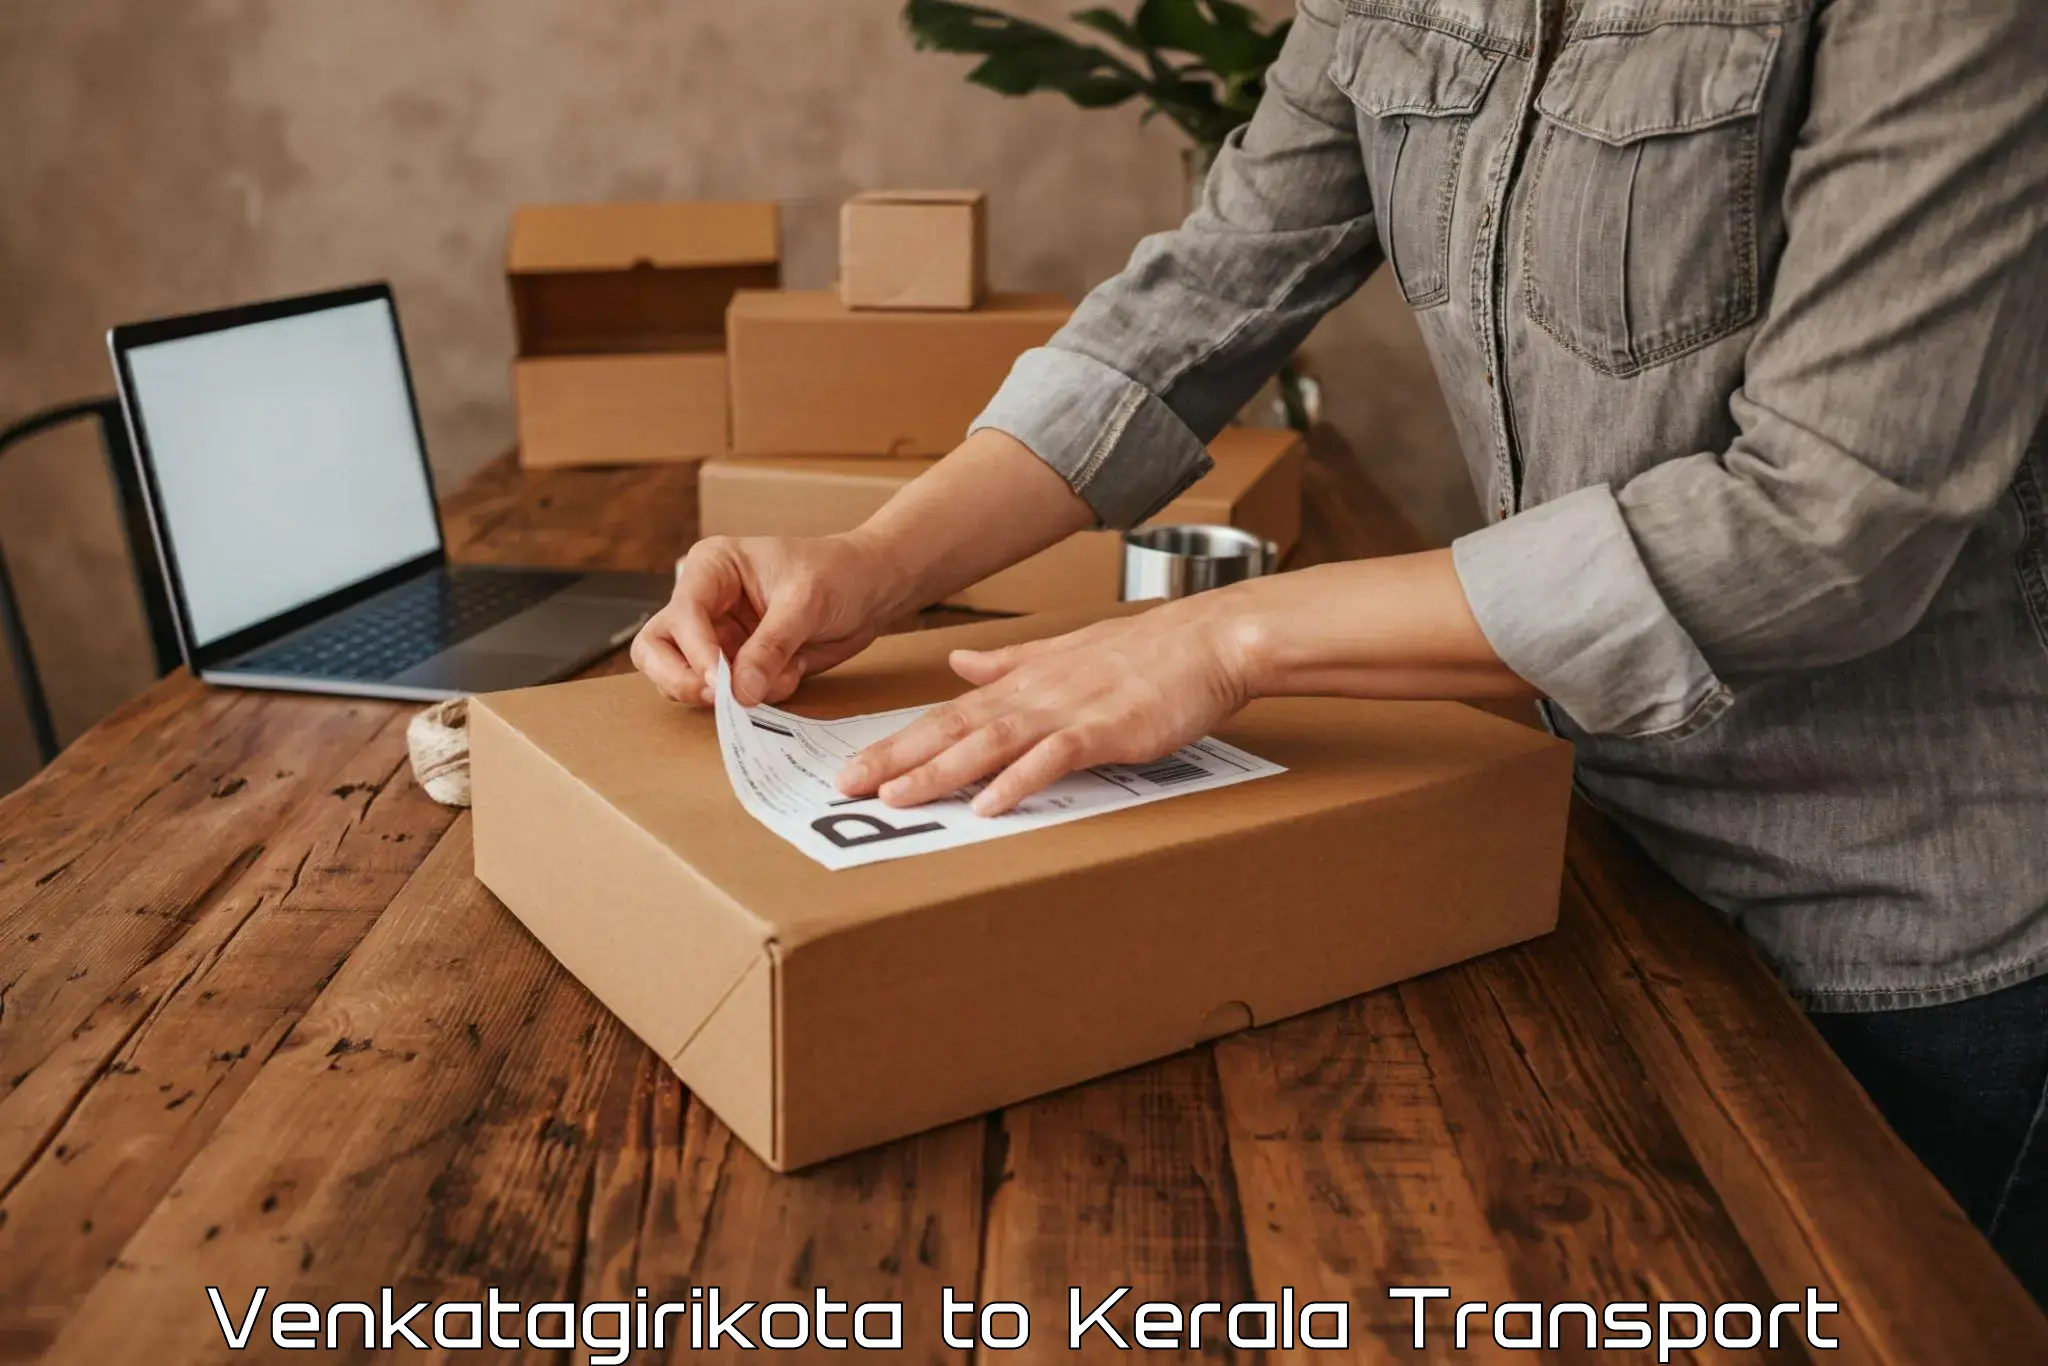 Two wheeler parcel service in Venkatagirikota to Ernakulam